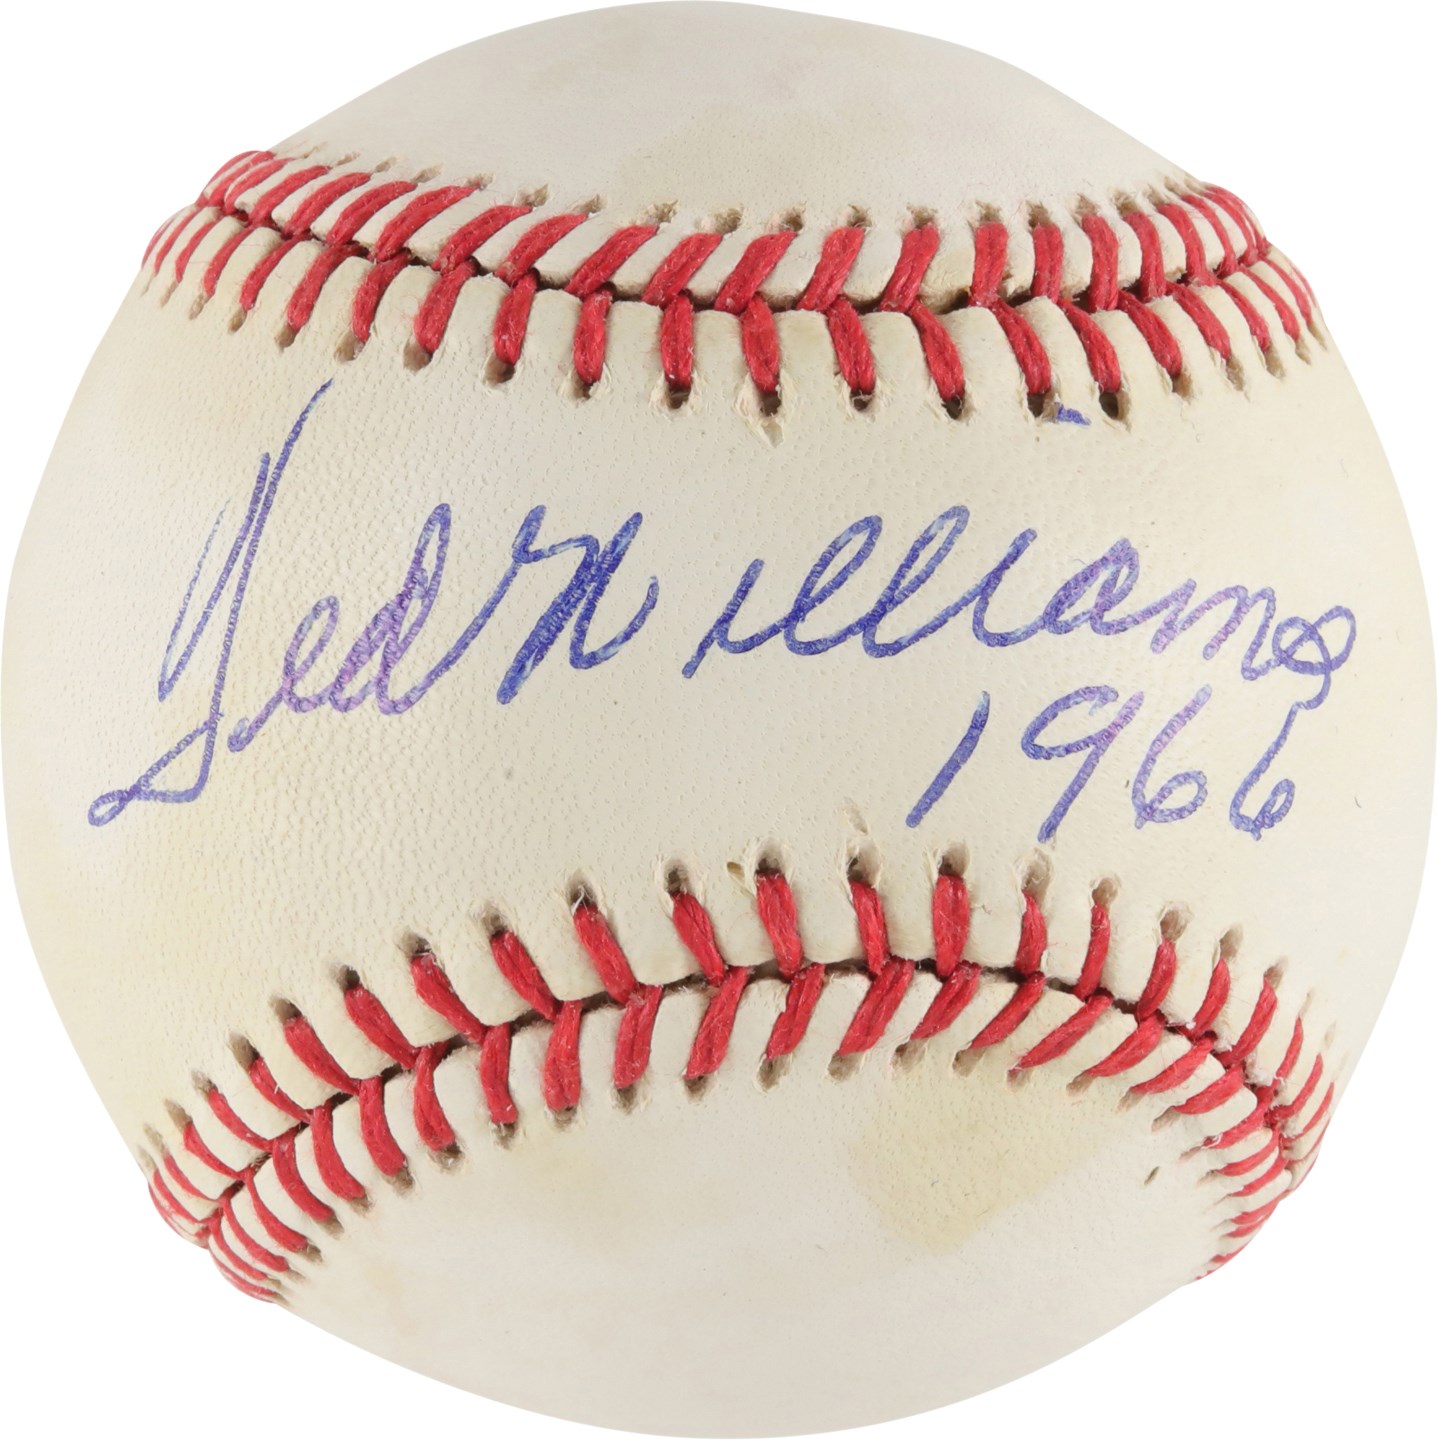 Baseball Autographs - Ted Williams Single Signed Baseball w/1966 Inscription - Hall of Fame Year (JSA)